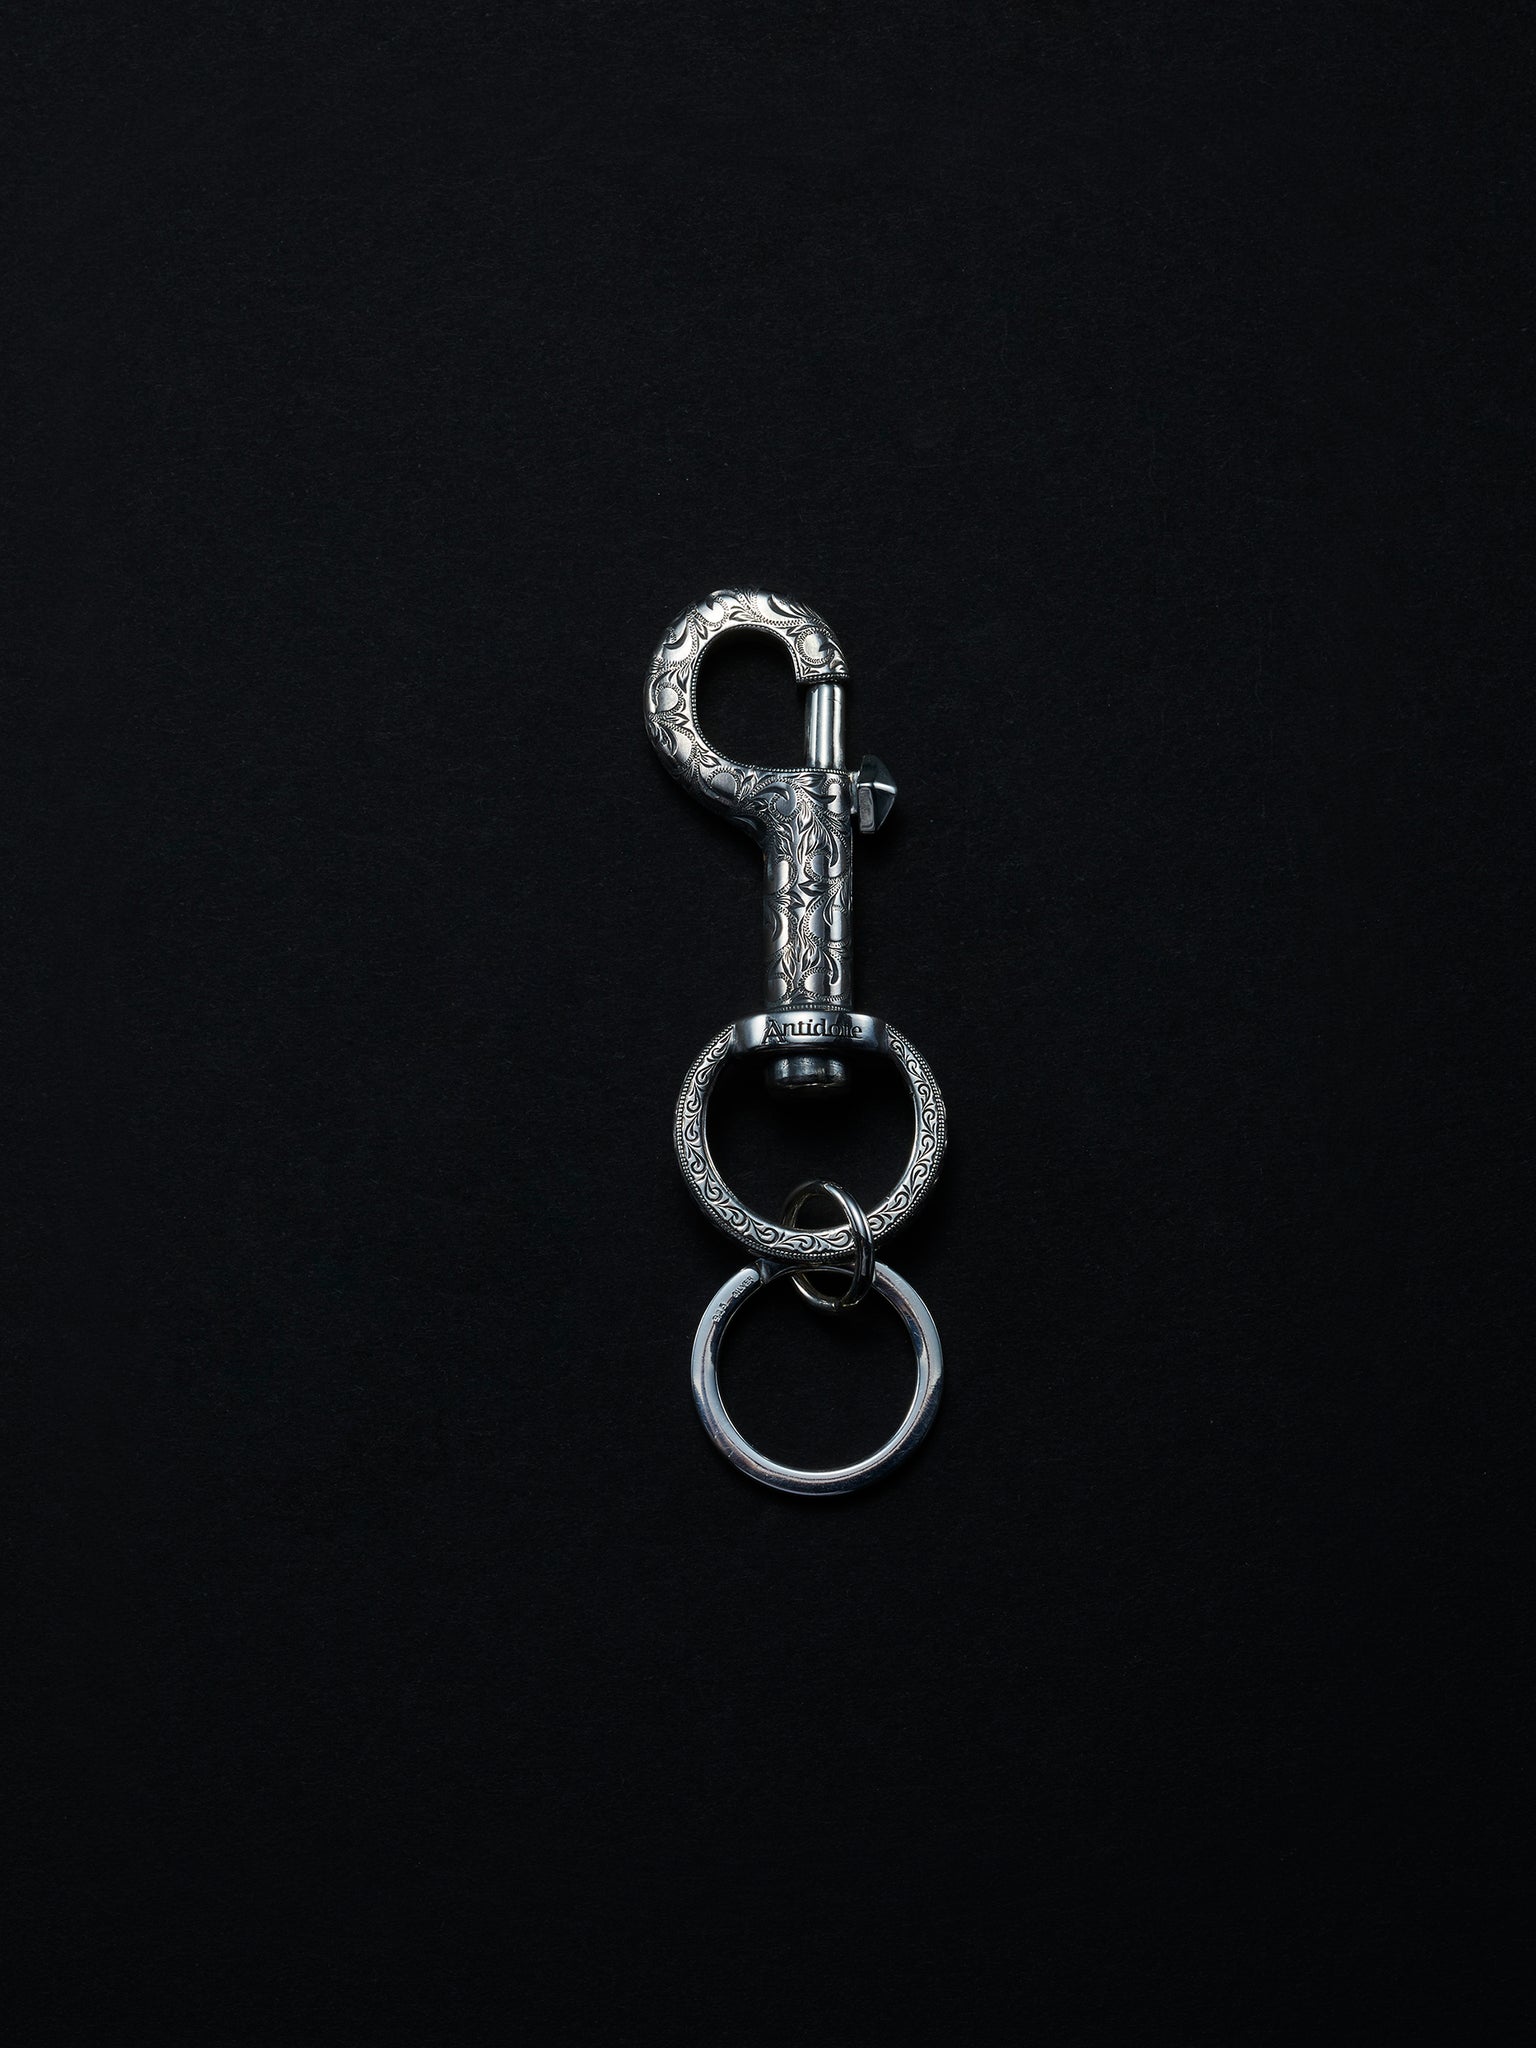 Engraved Key Ring Clip